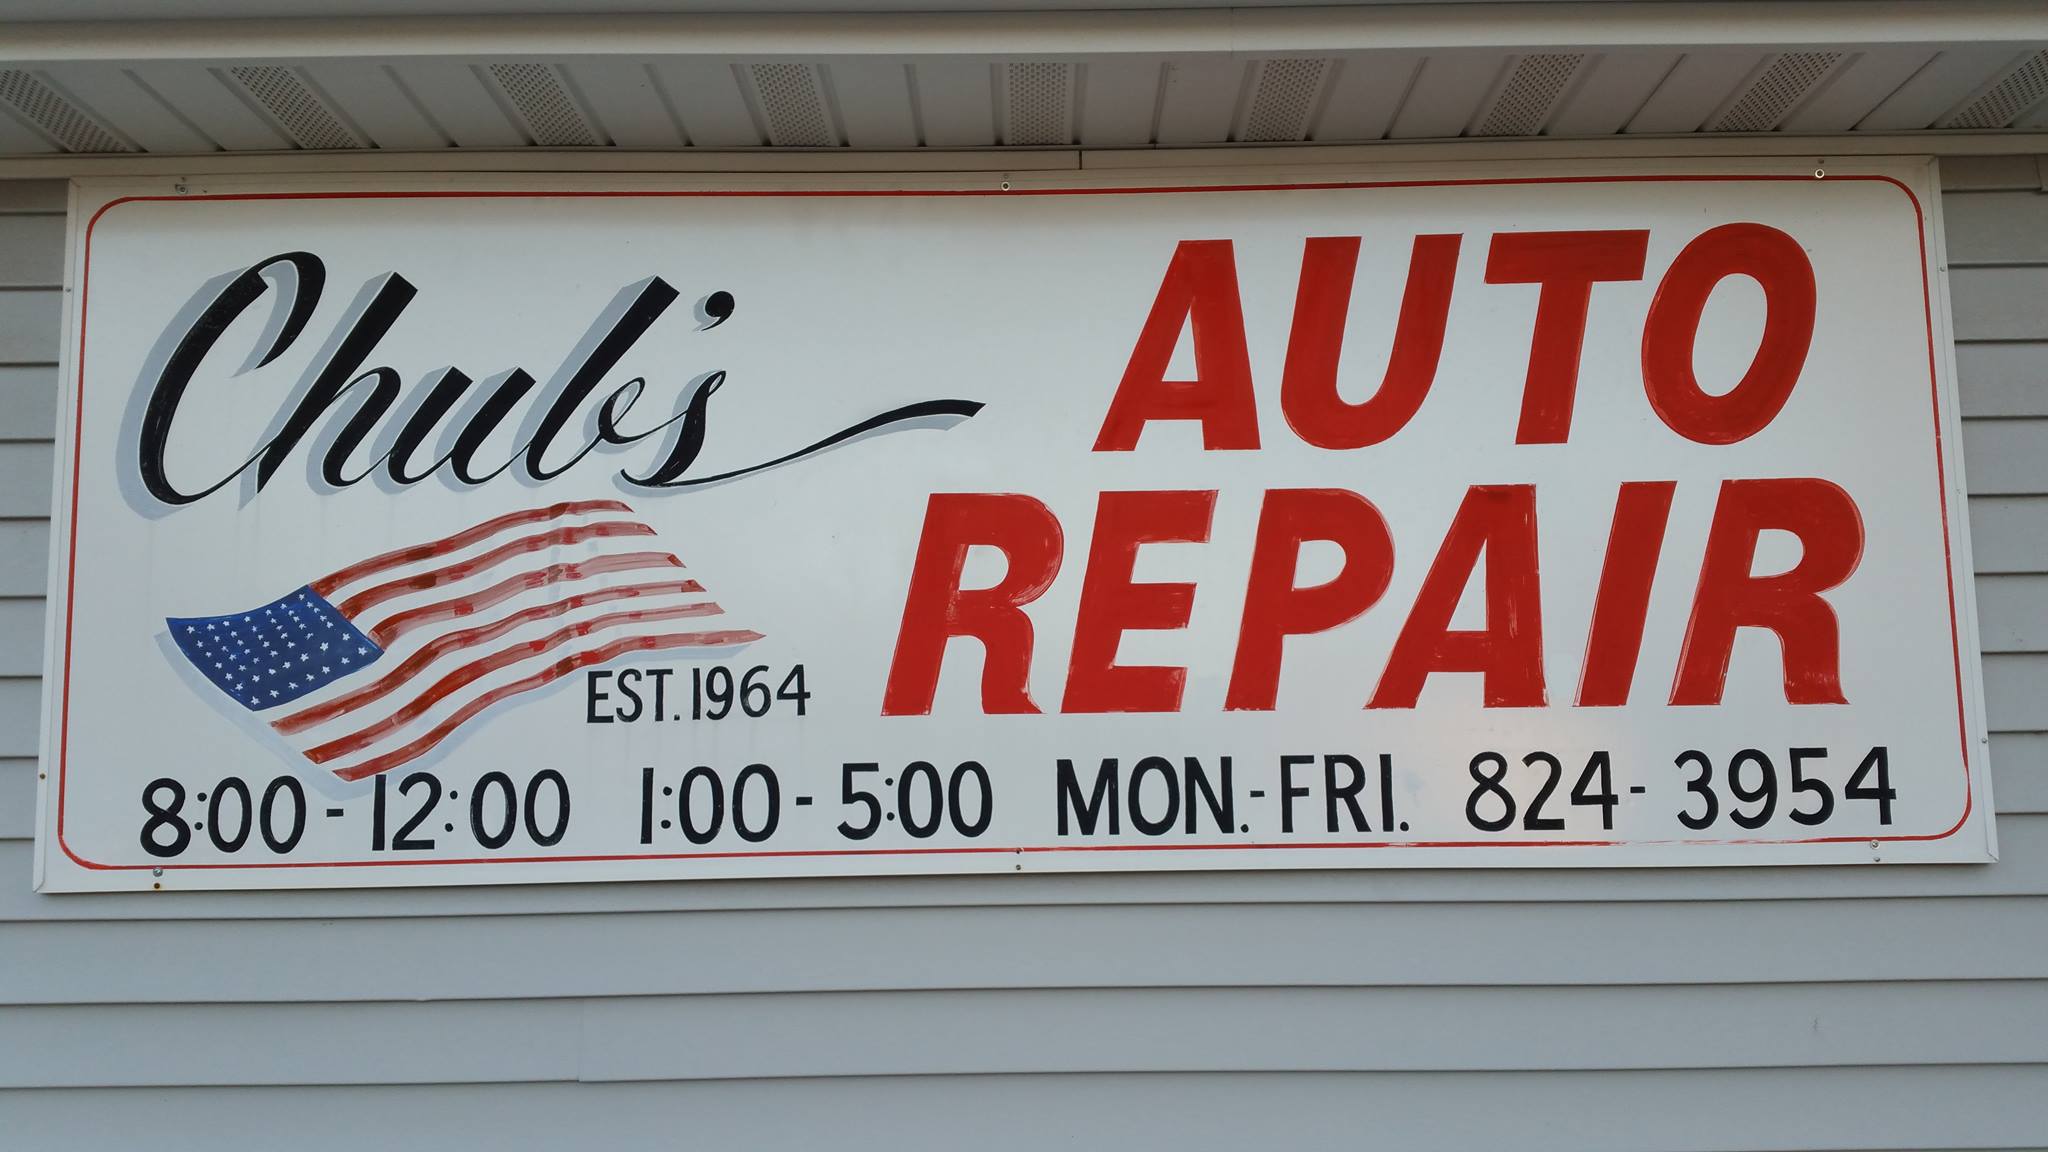 Chub's Auto Repair